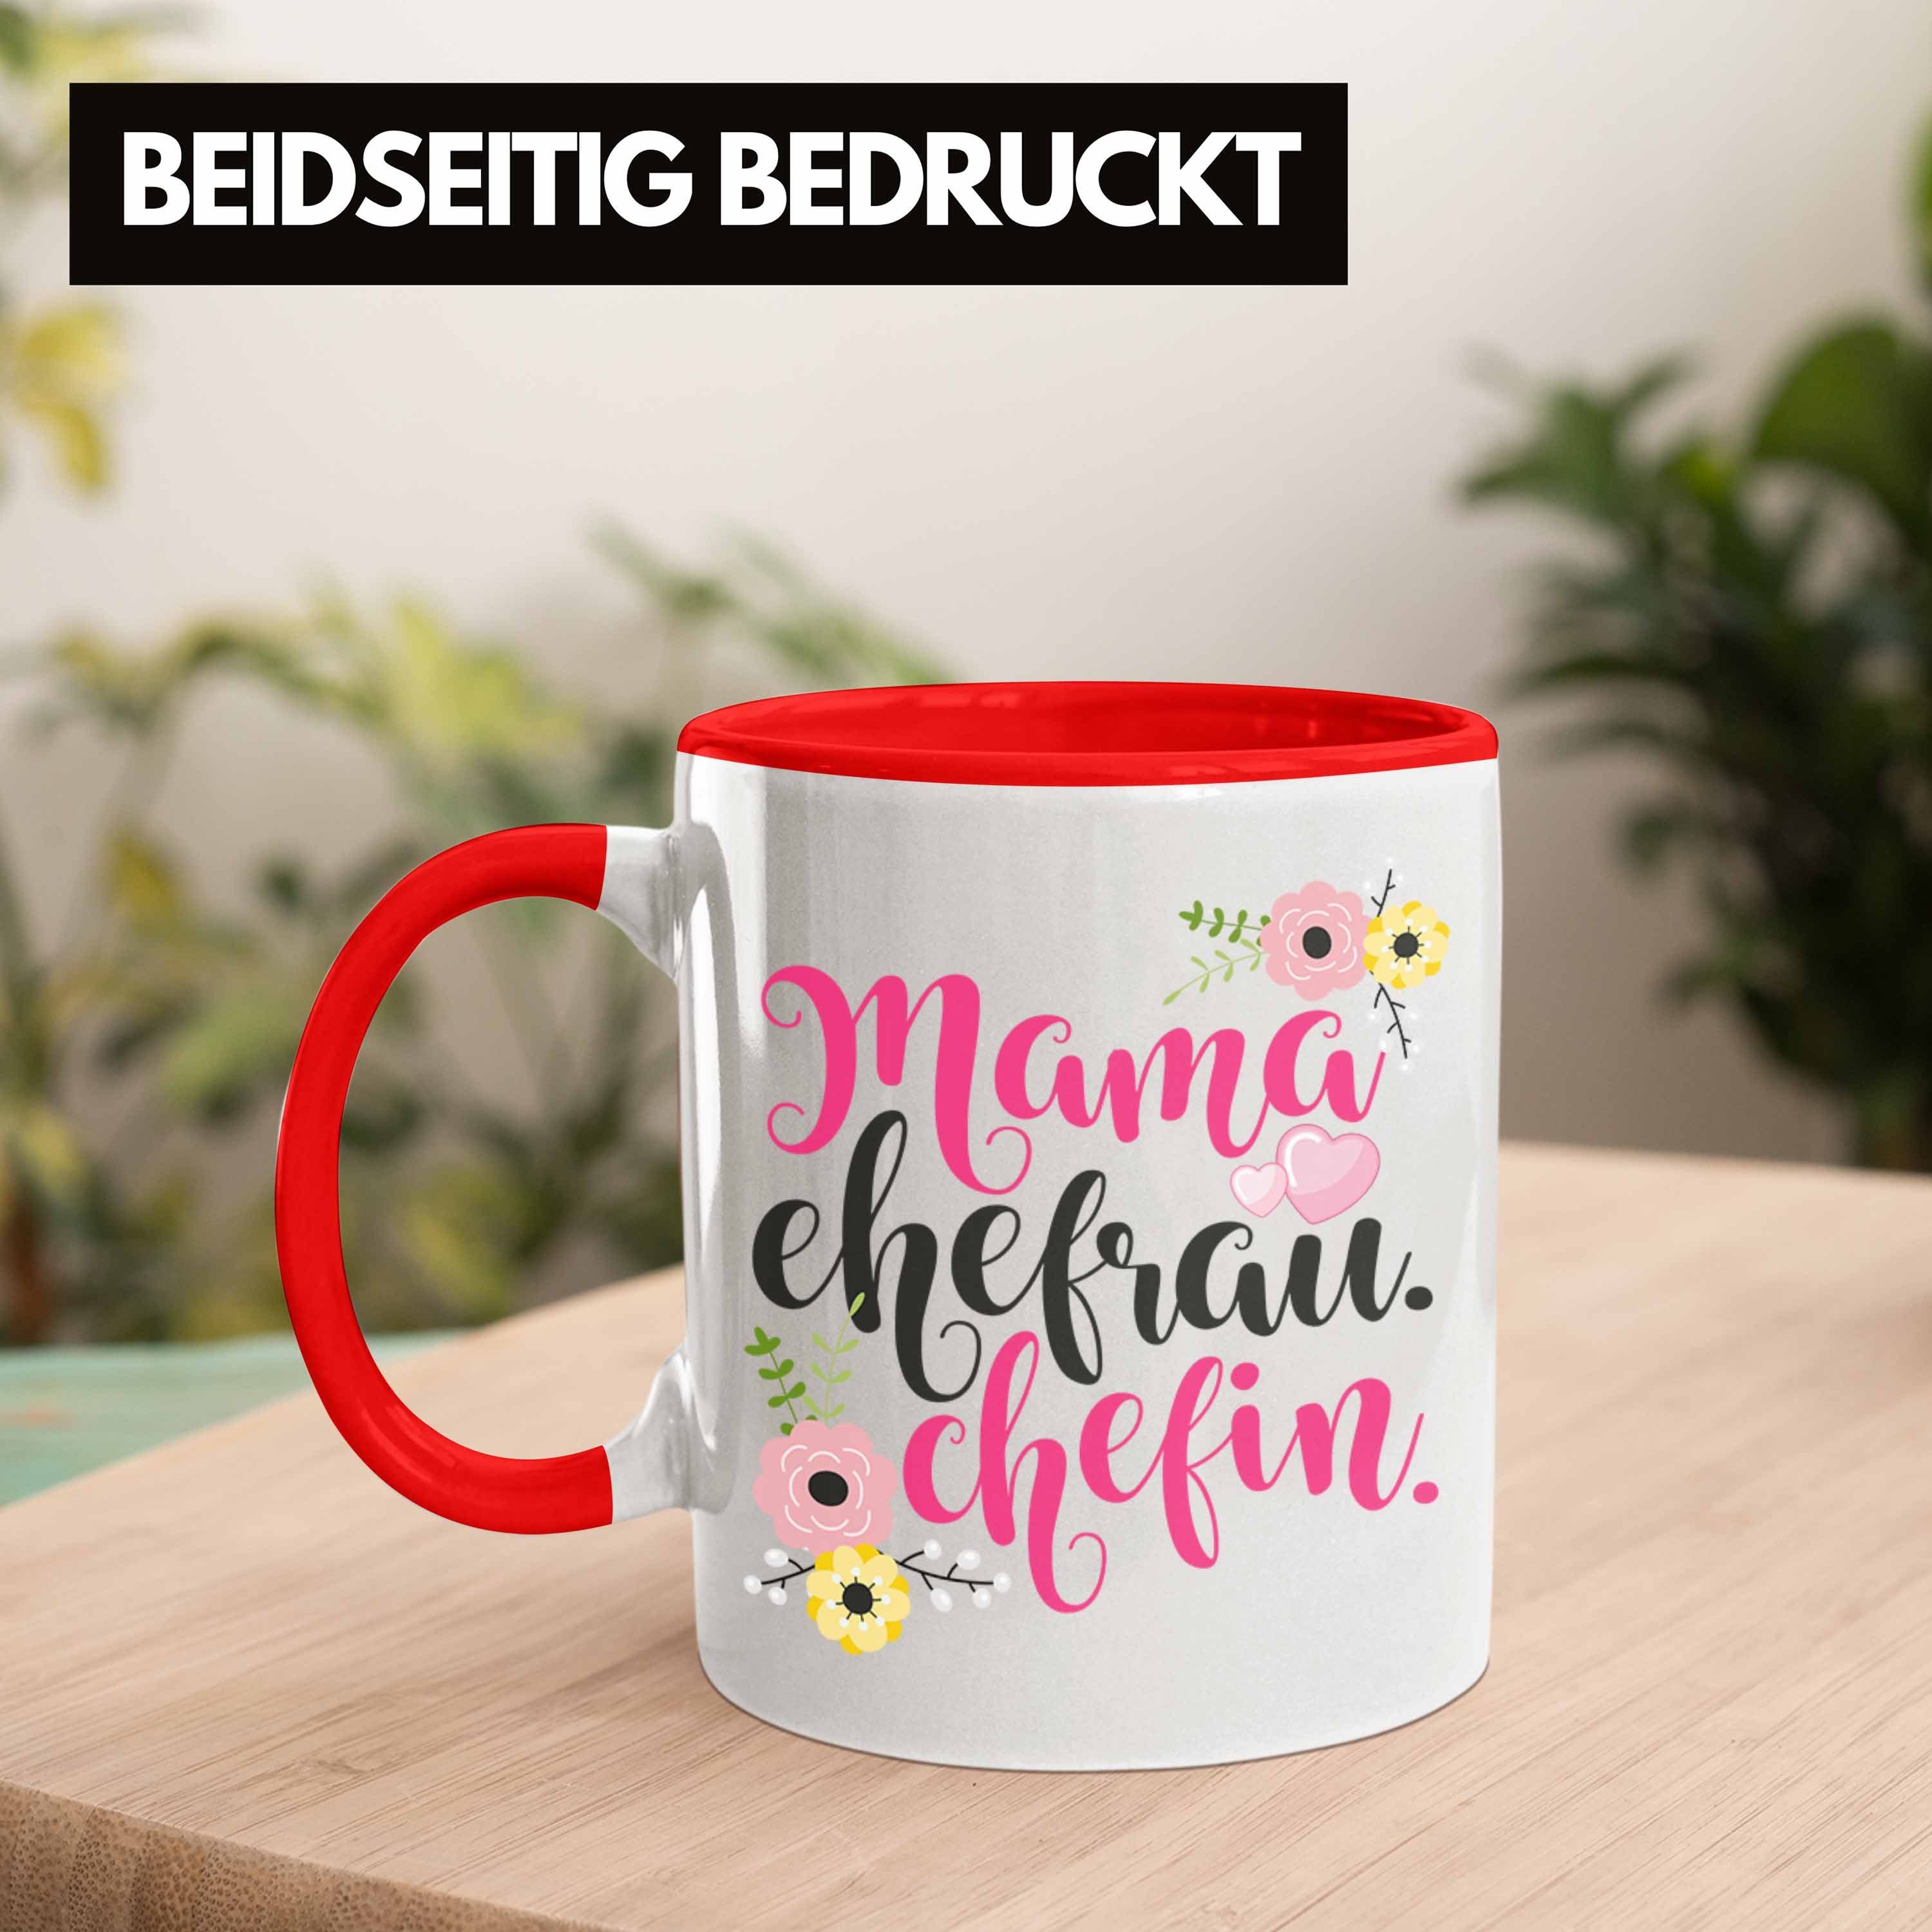 Geburtstag Beste Ehefrau Frau Trendation Muttertag Chefin Mama Tasse - Rot Tasse Trendation Mutter Chefin Geschenk